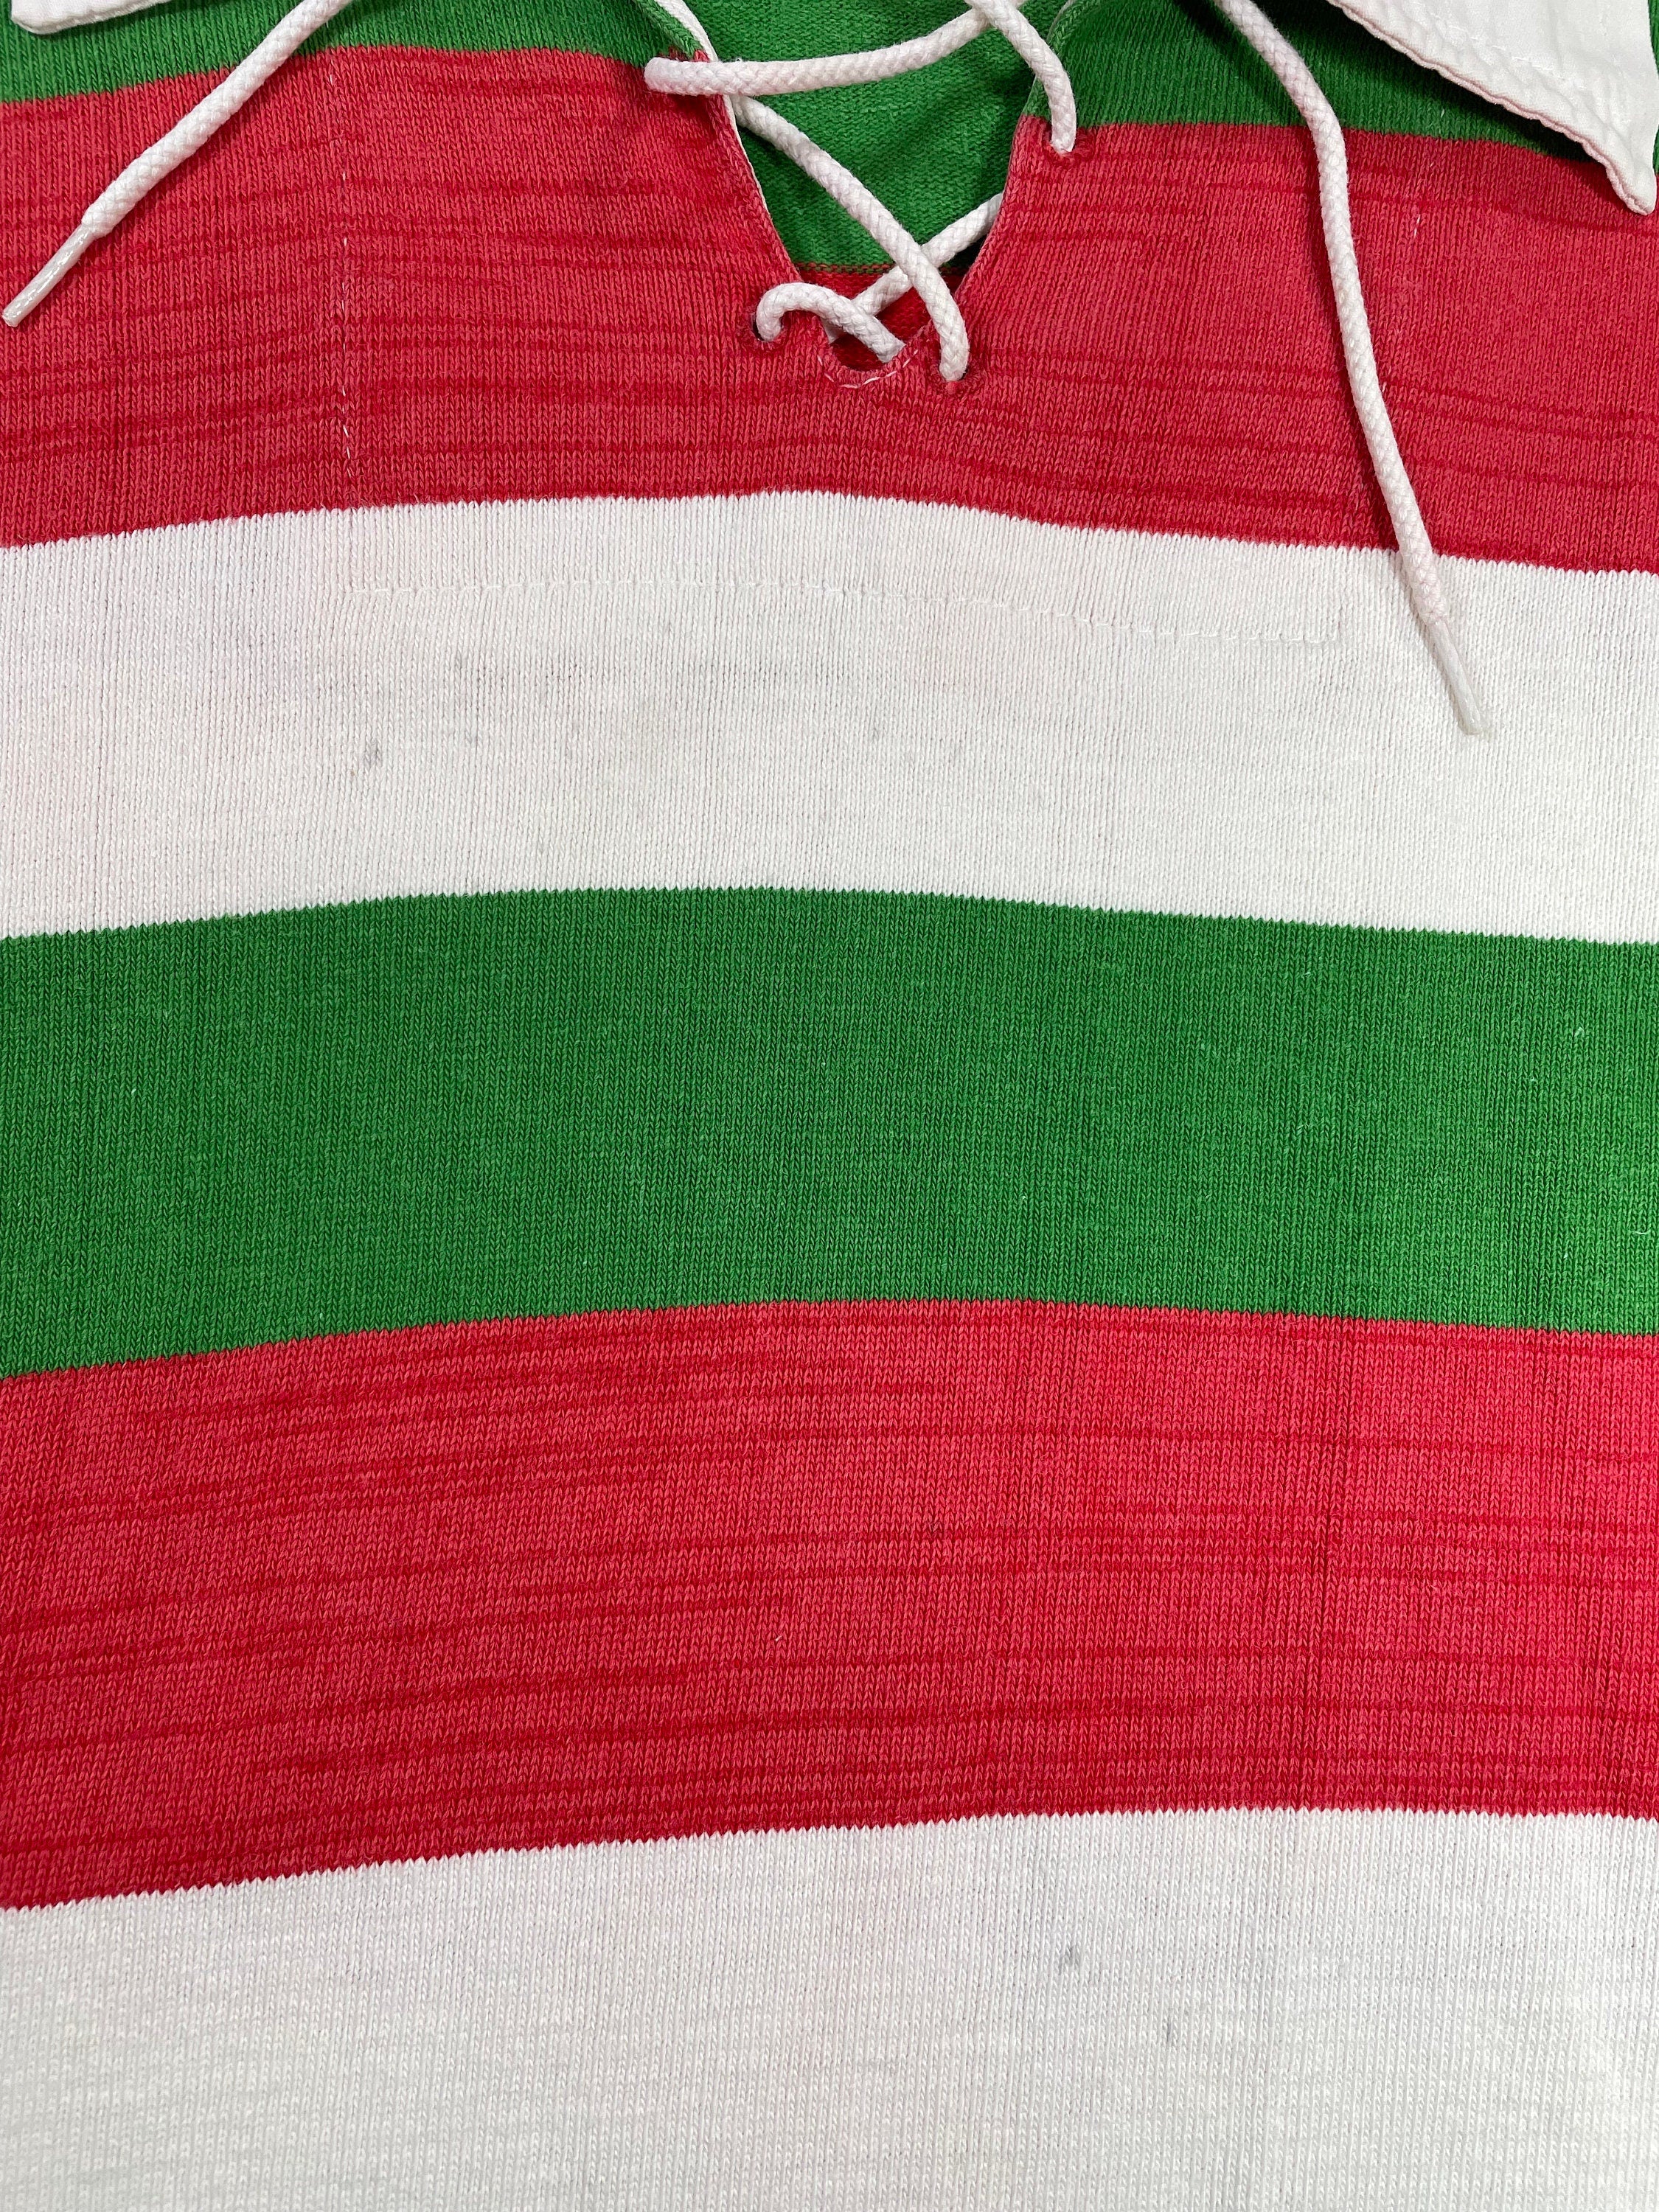 60s 70s Striped Knit Athletic Shirt - Men's Medium, Women's Large